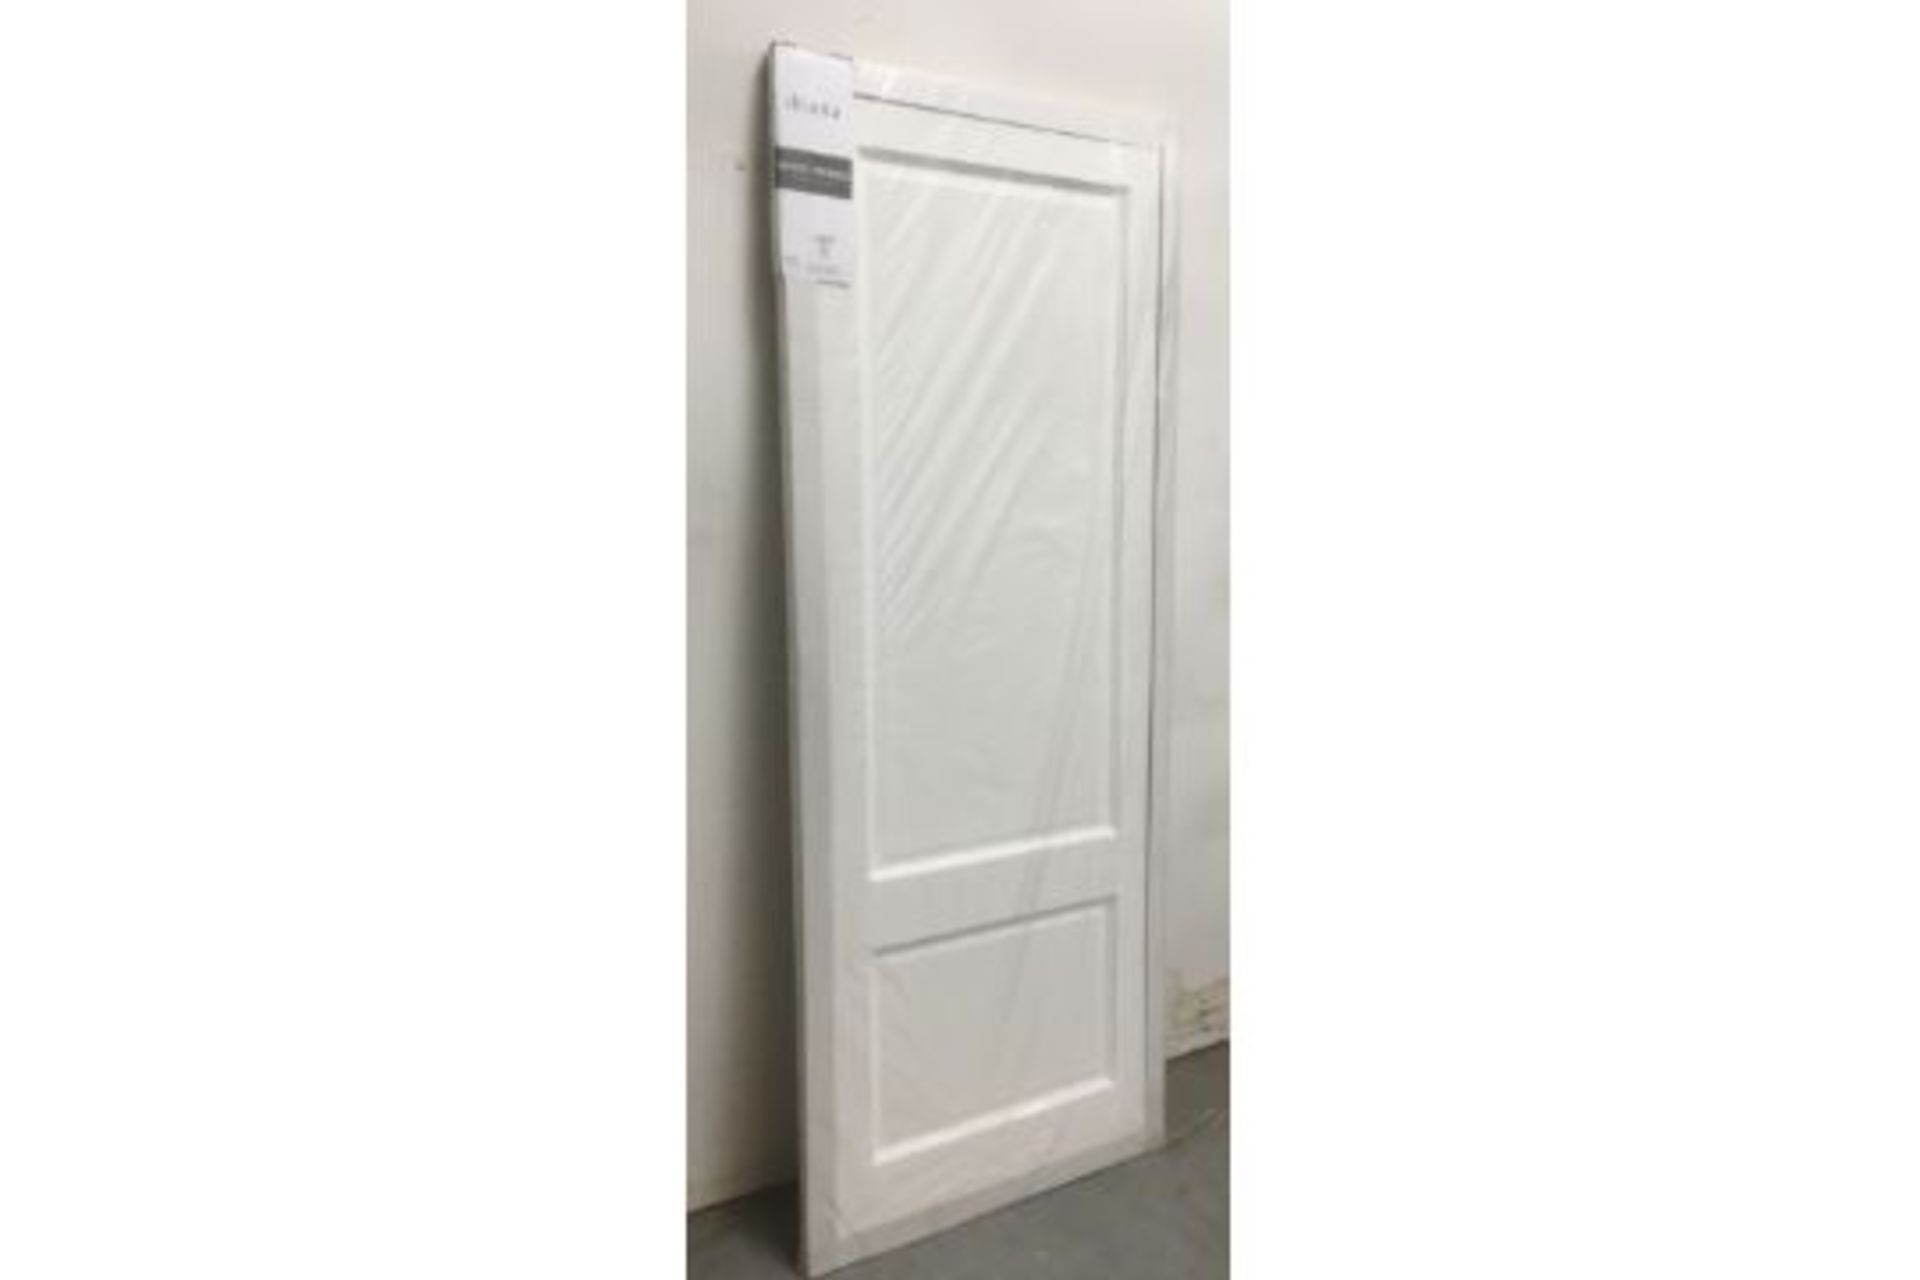 Deanta White Primed Madison Interior Door | 1981mm x 762mm x 35mm - Image 3 of 3